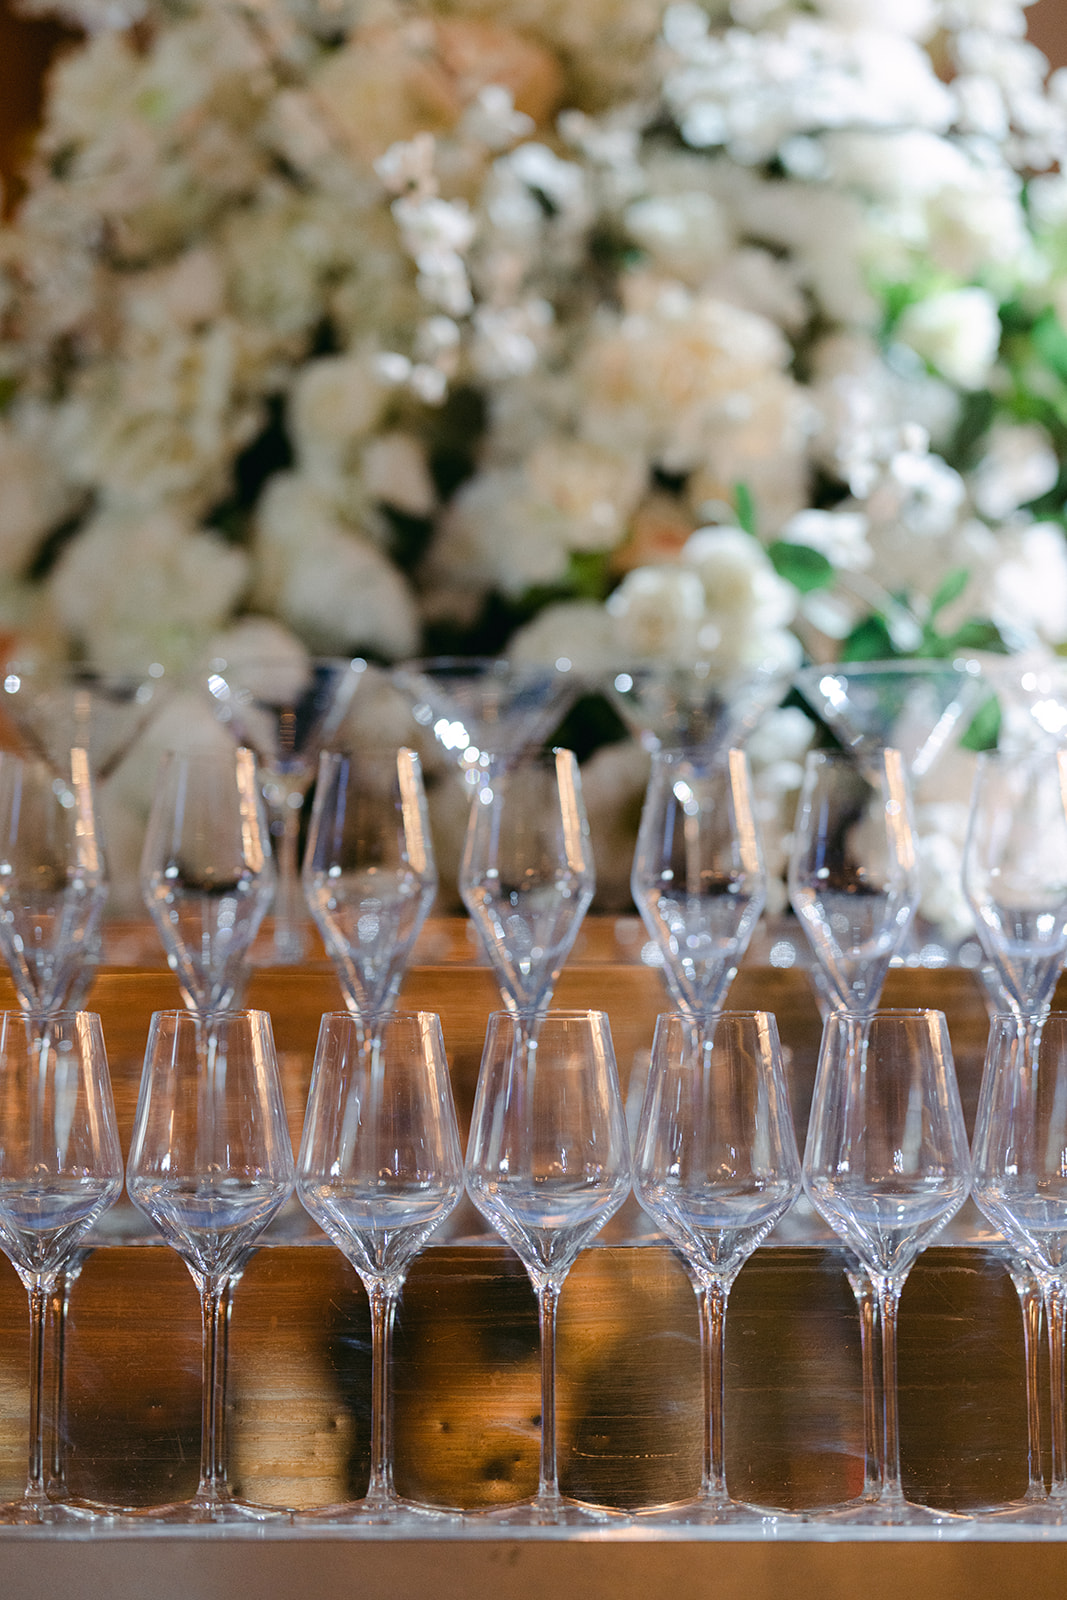 Champagne glass set up at bar 